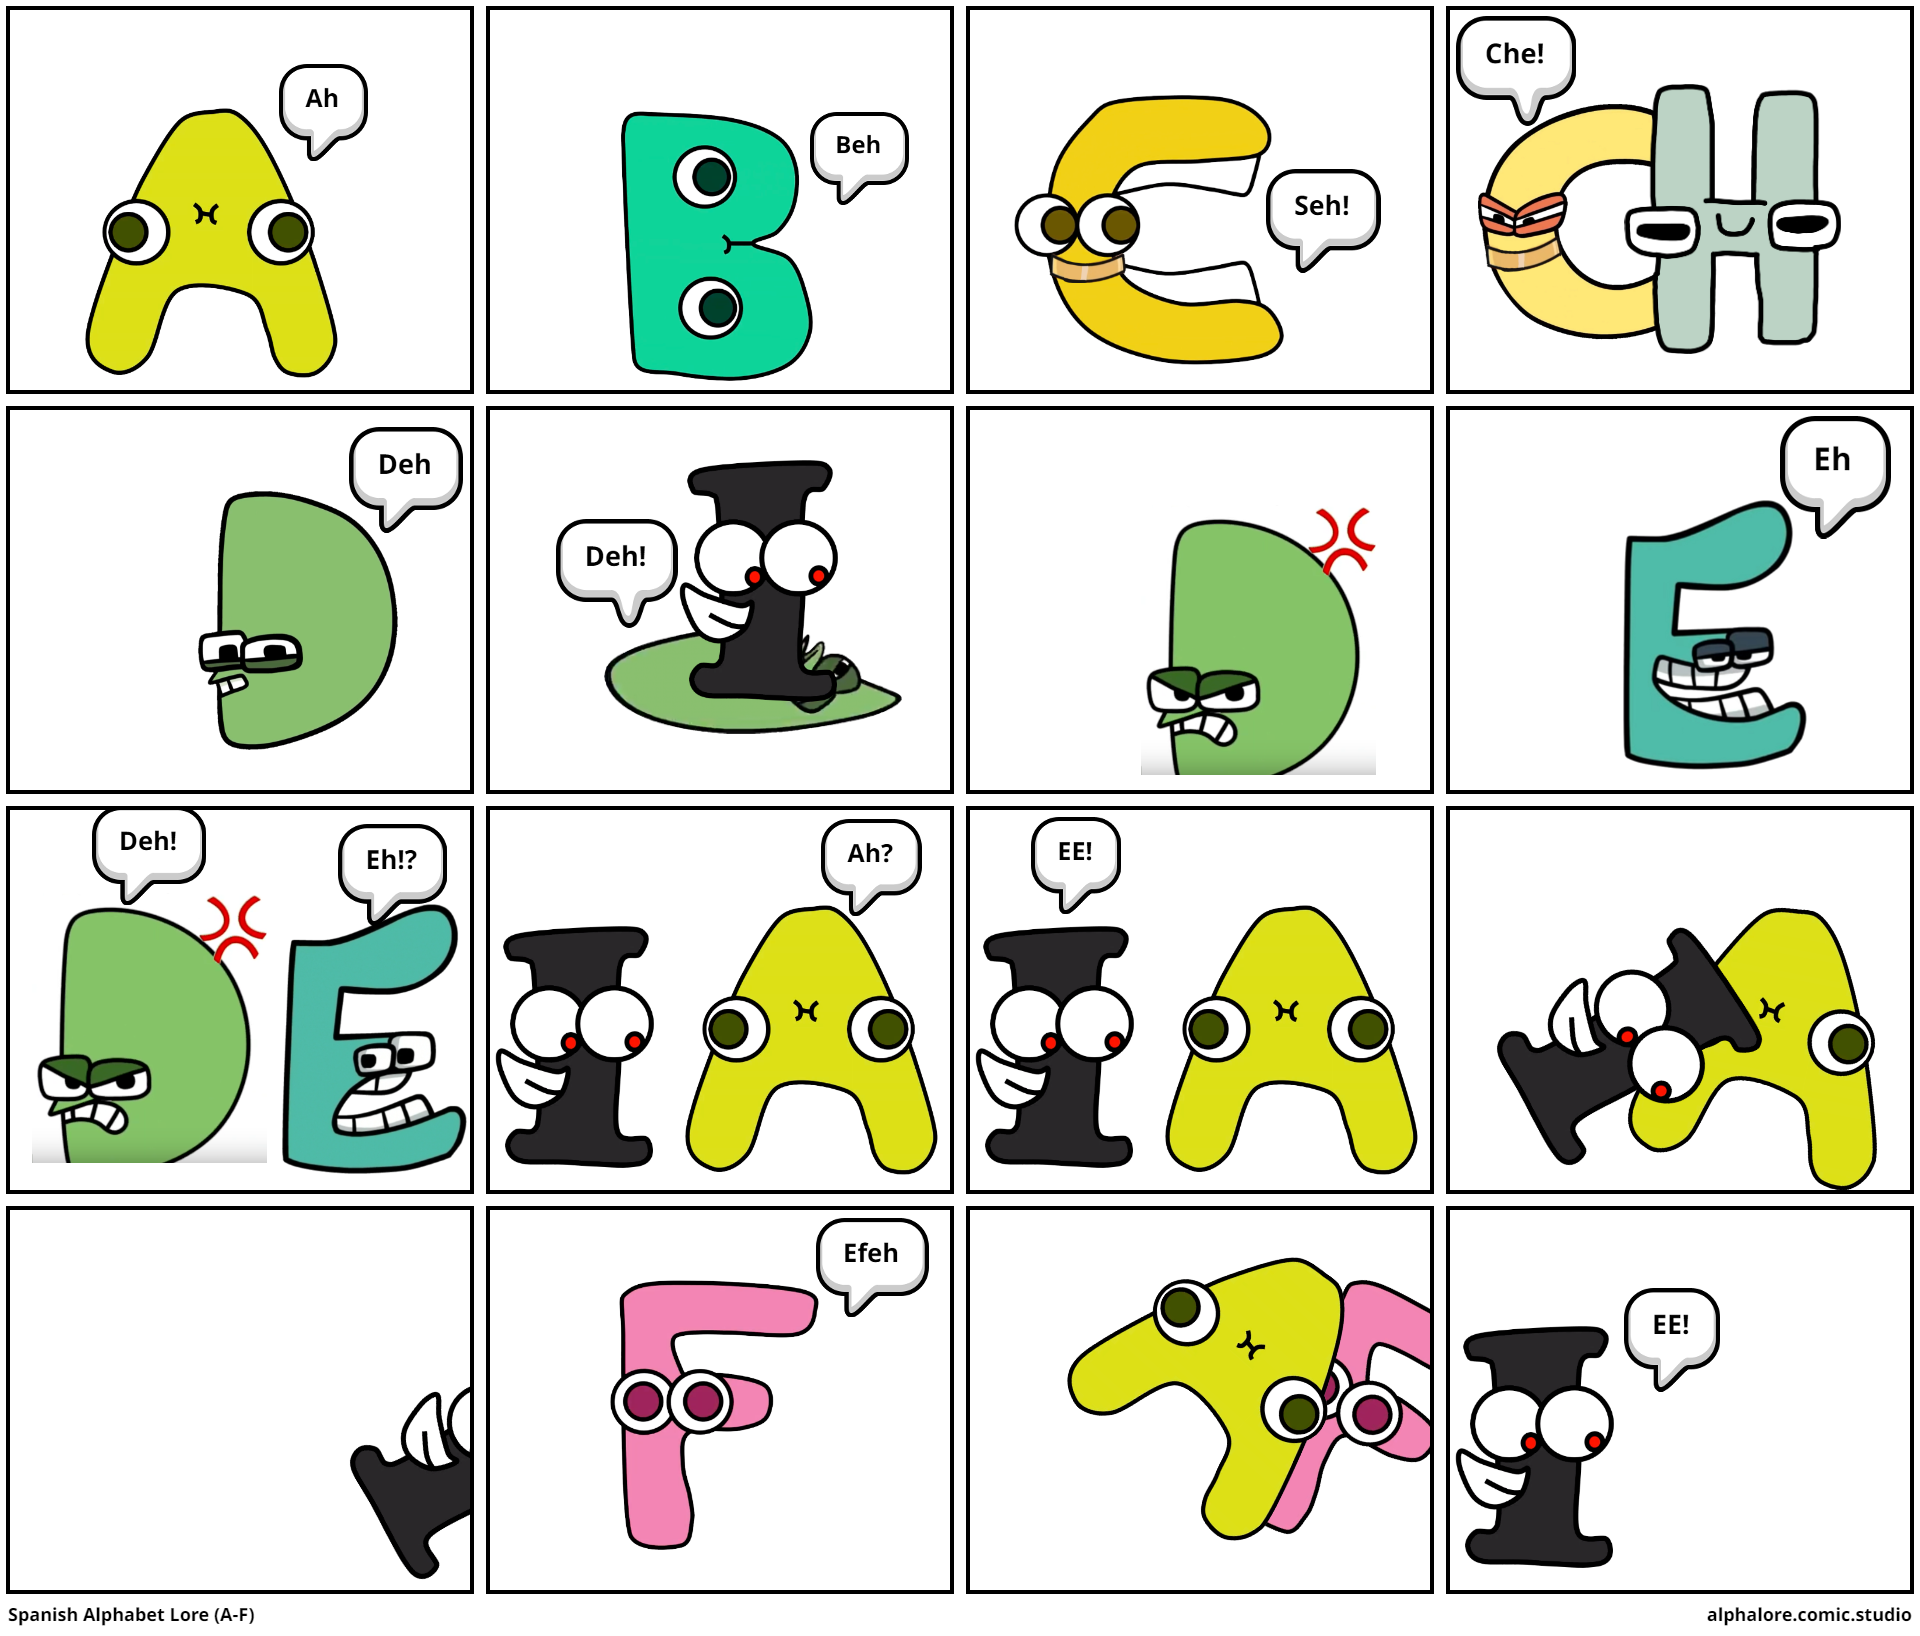 Spanish Alphabet Lore A-F Of Alphabet Lore - Comic Studio